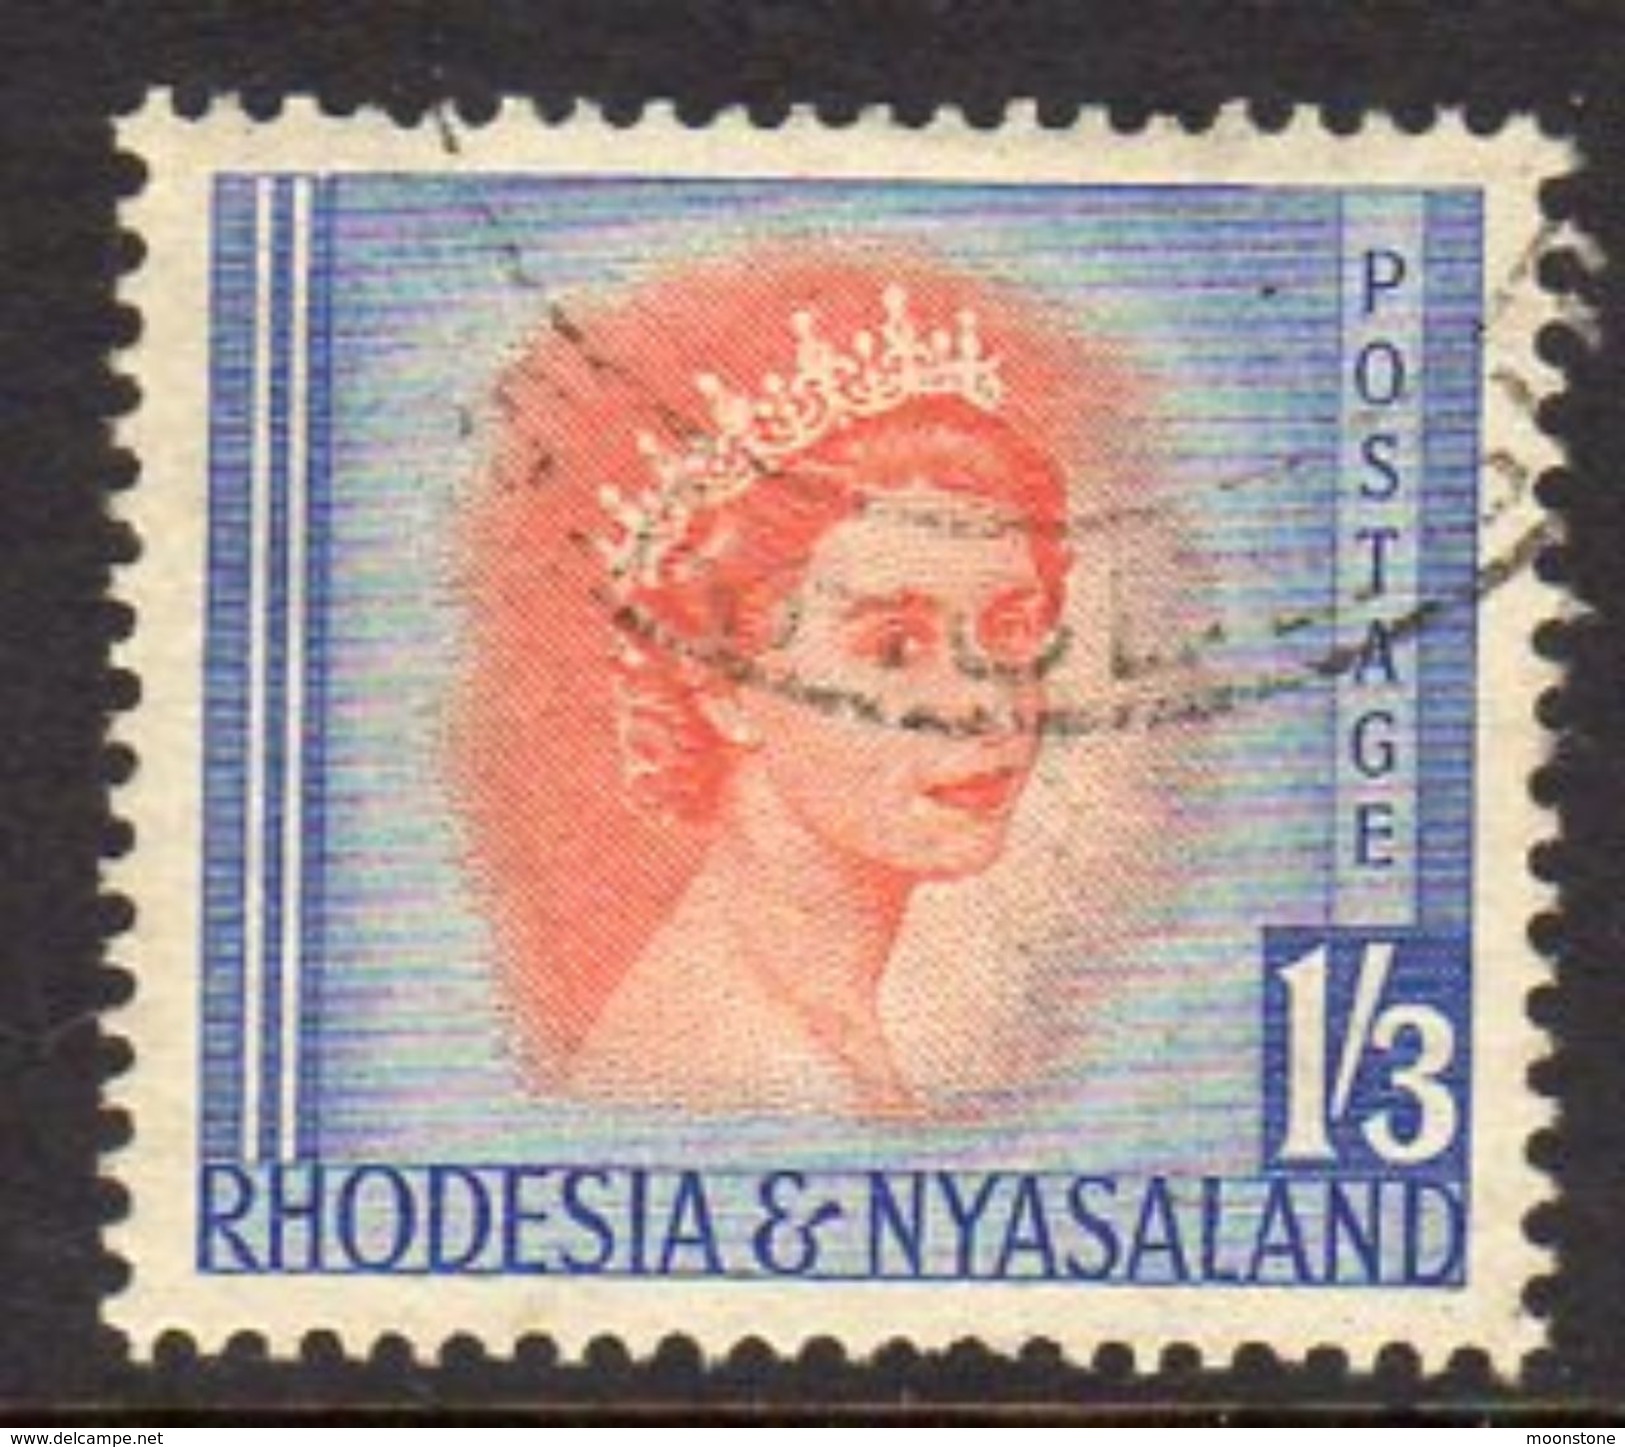 Rhodesia & Nyasaland 1954 1/3d Definitive, Used, SG 10 (BA) - Rhodesië & Nyasaland (1954-1963)